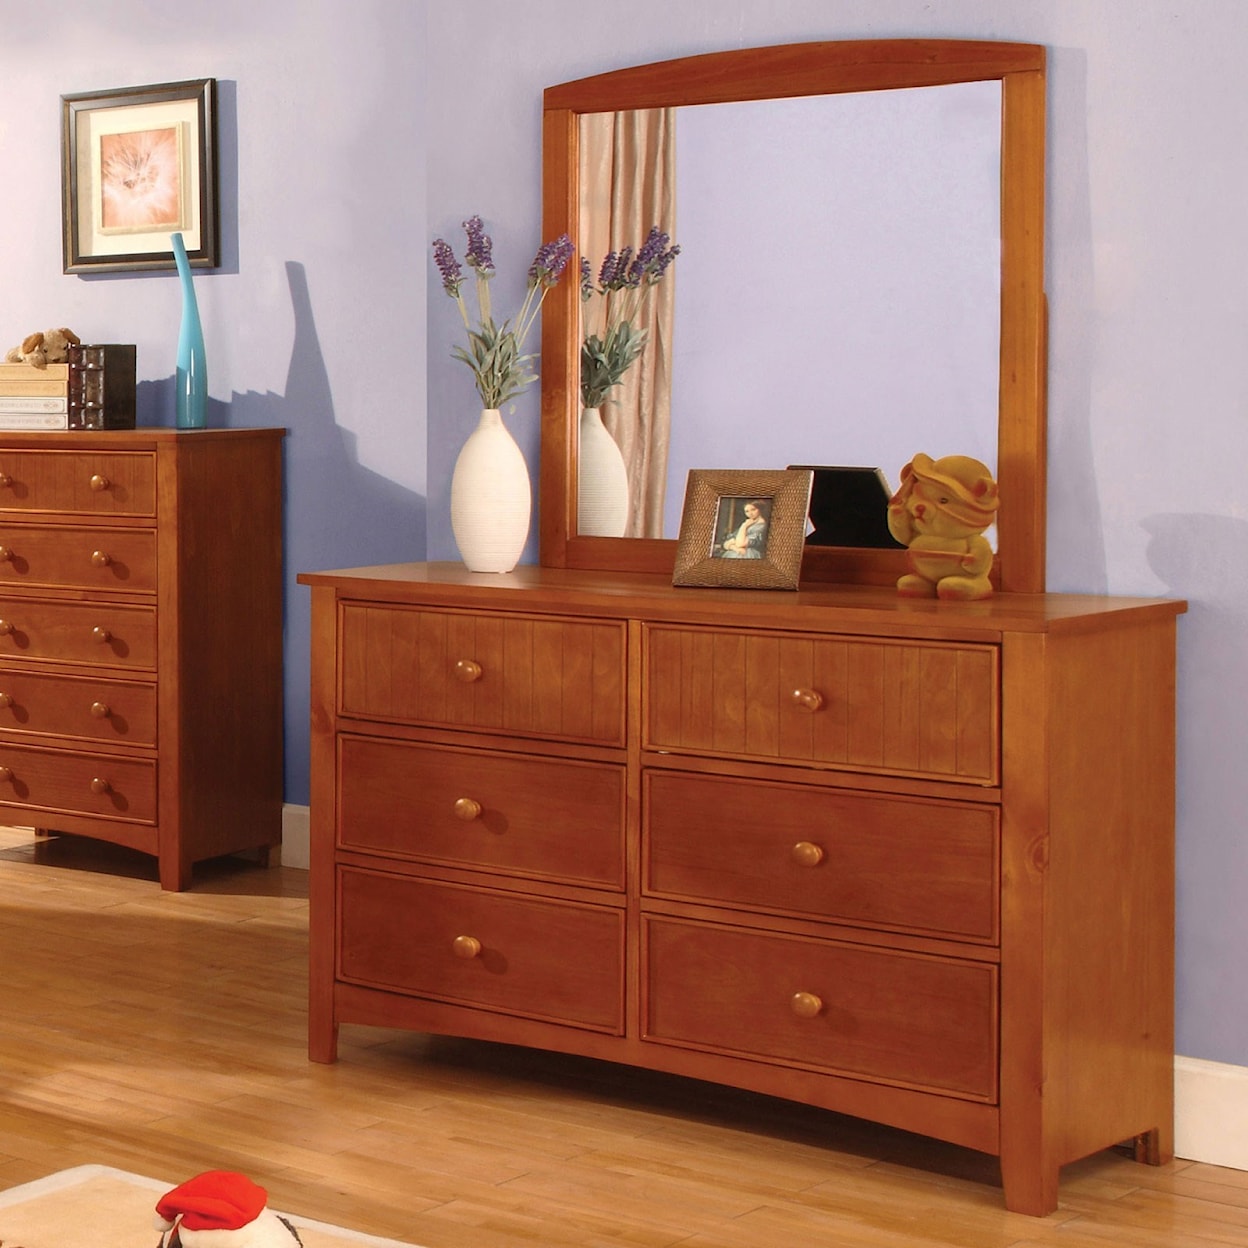 Furniture of America Omnus Dresser and Mirror